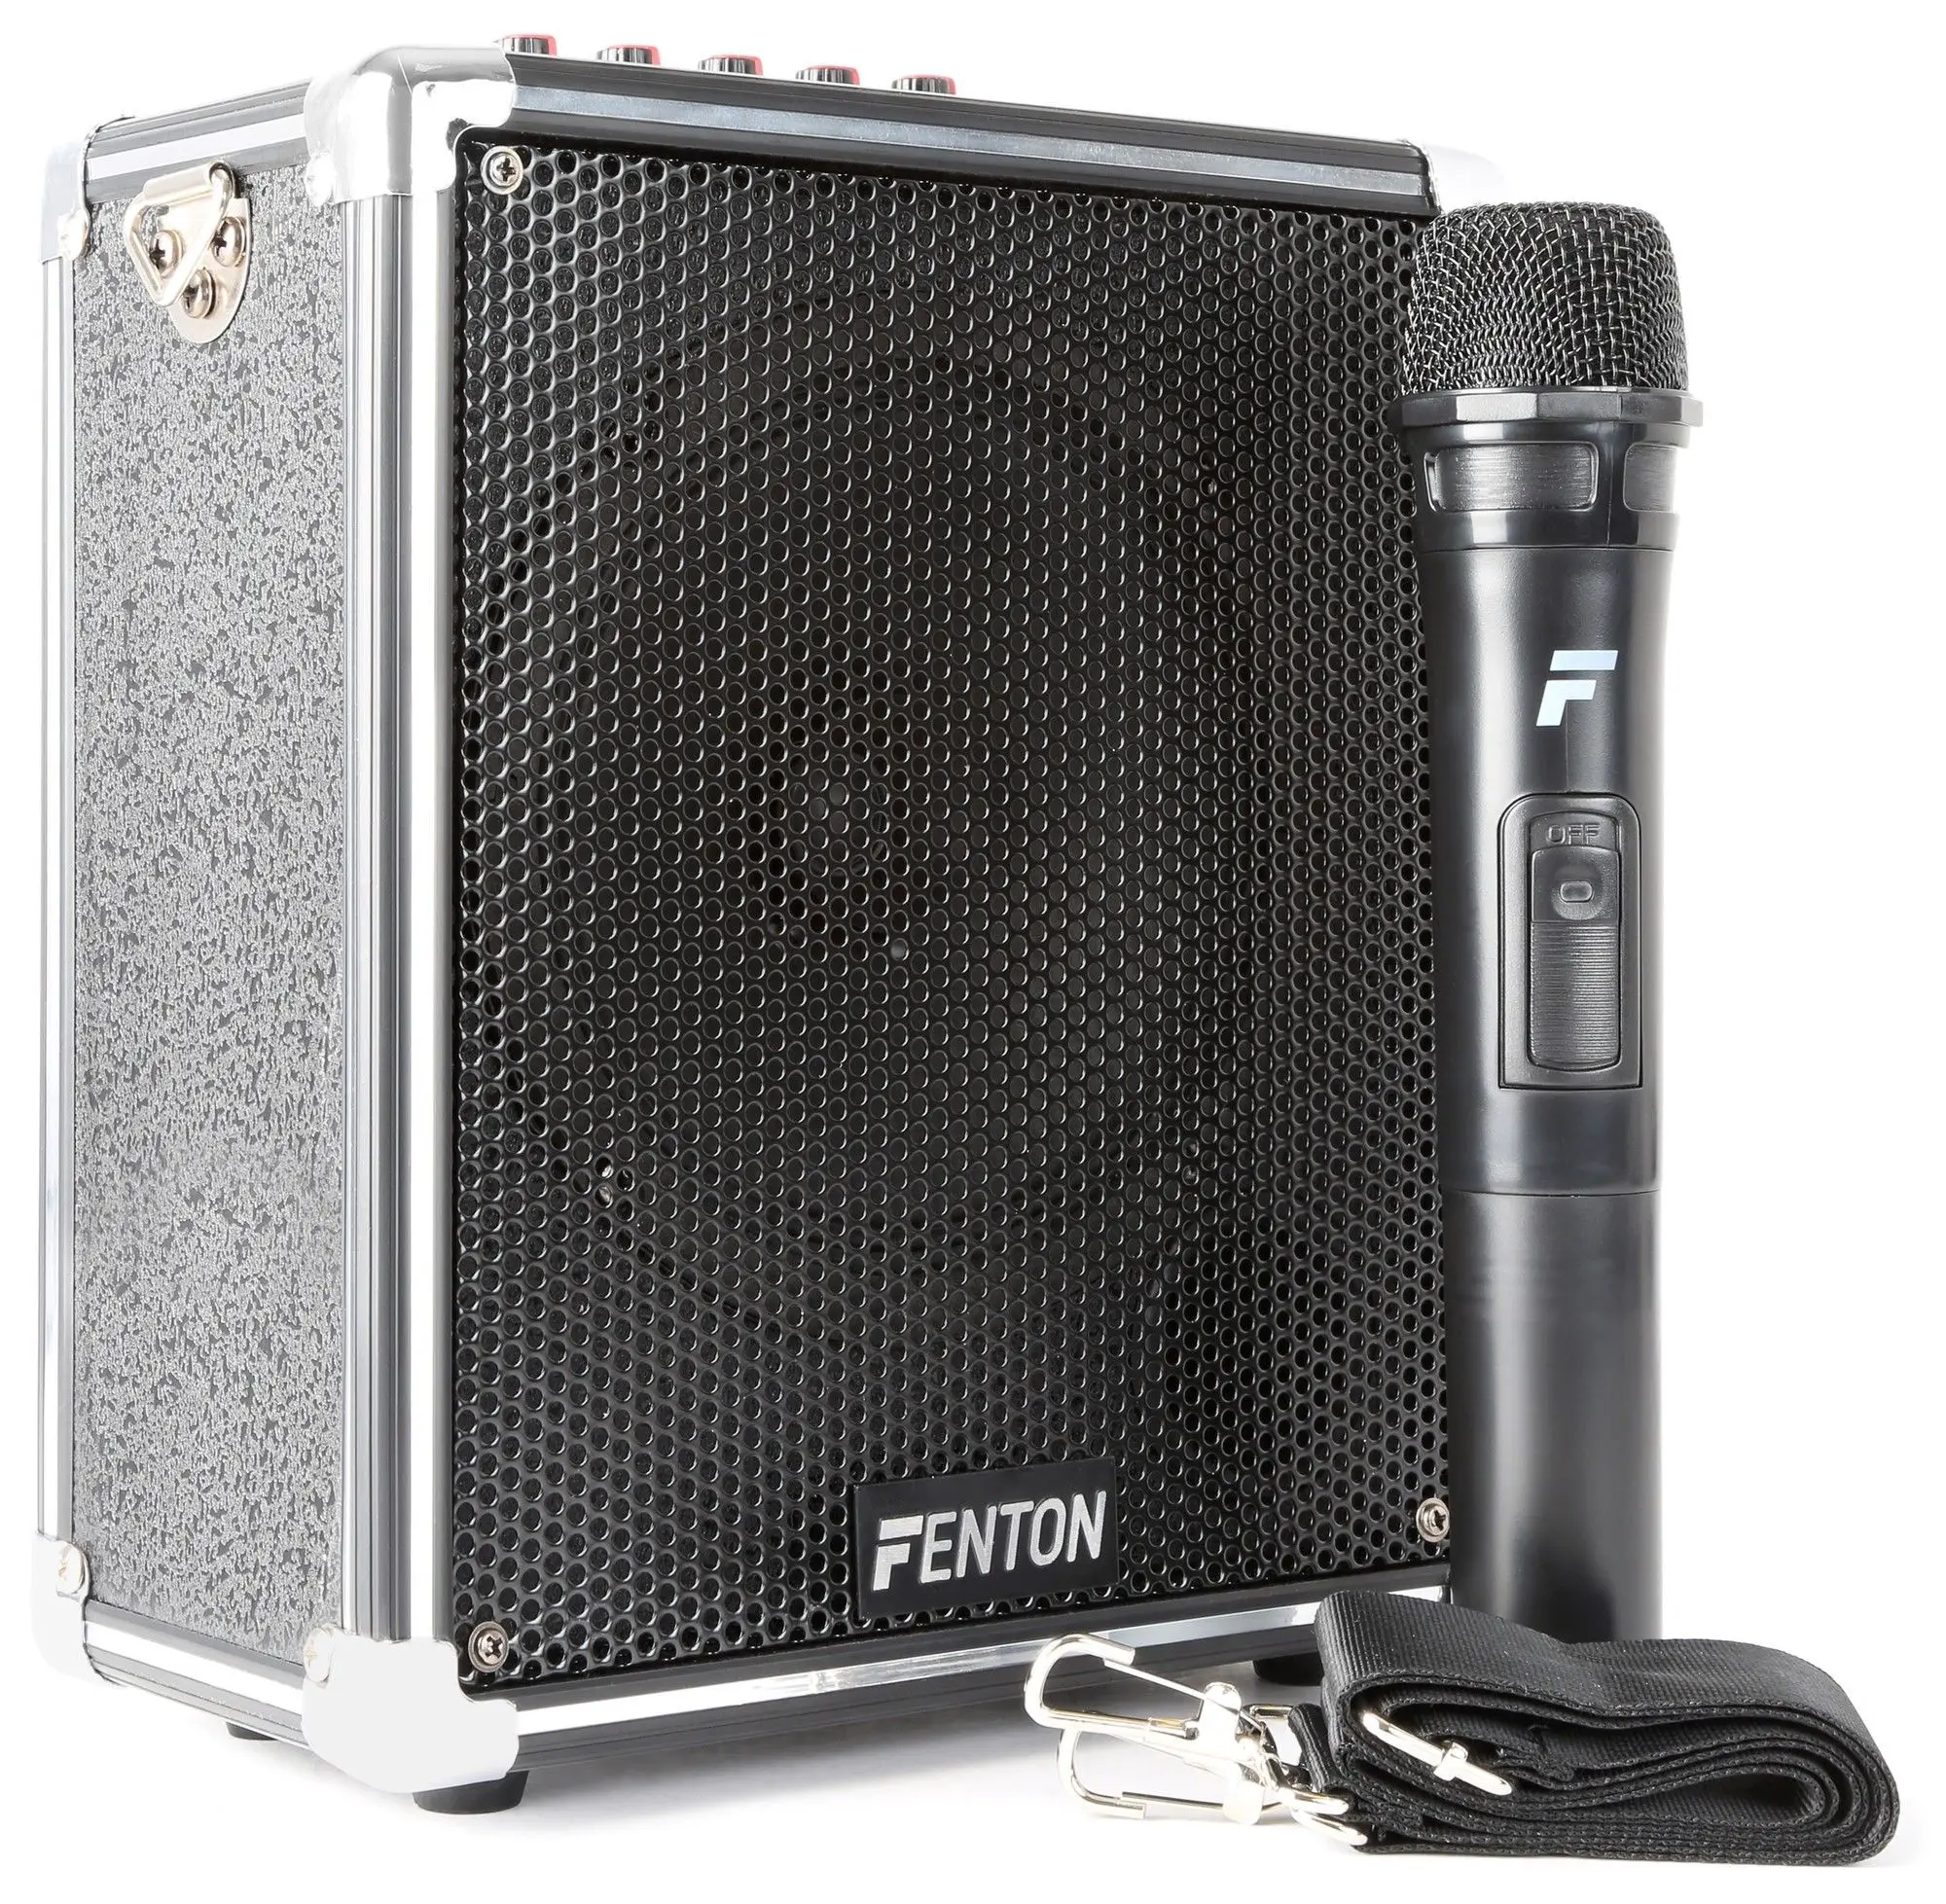 Retourdeal - Fenton ST040 Draagbare speaker 40W met Bluetooth